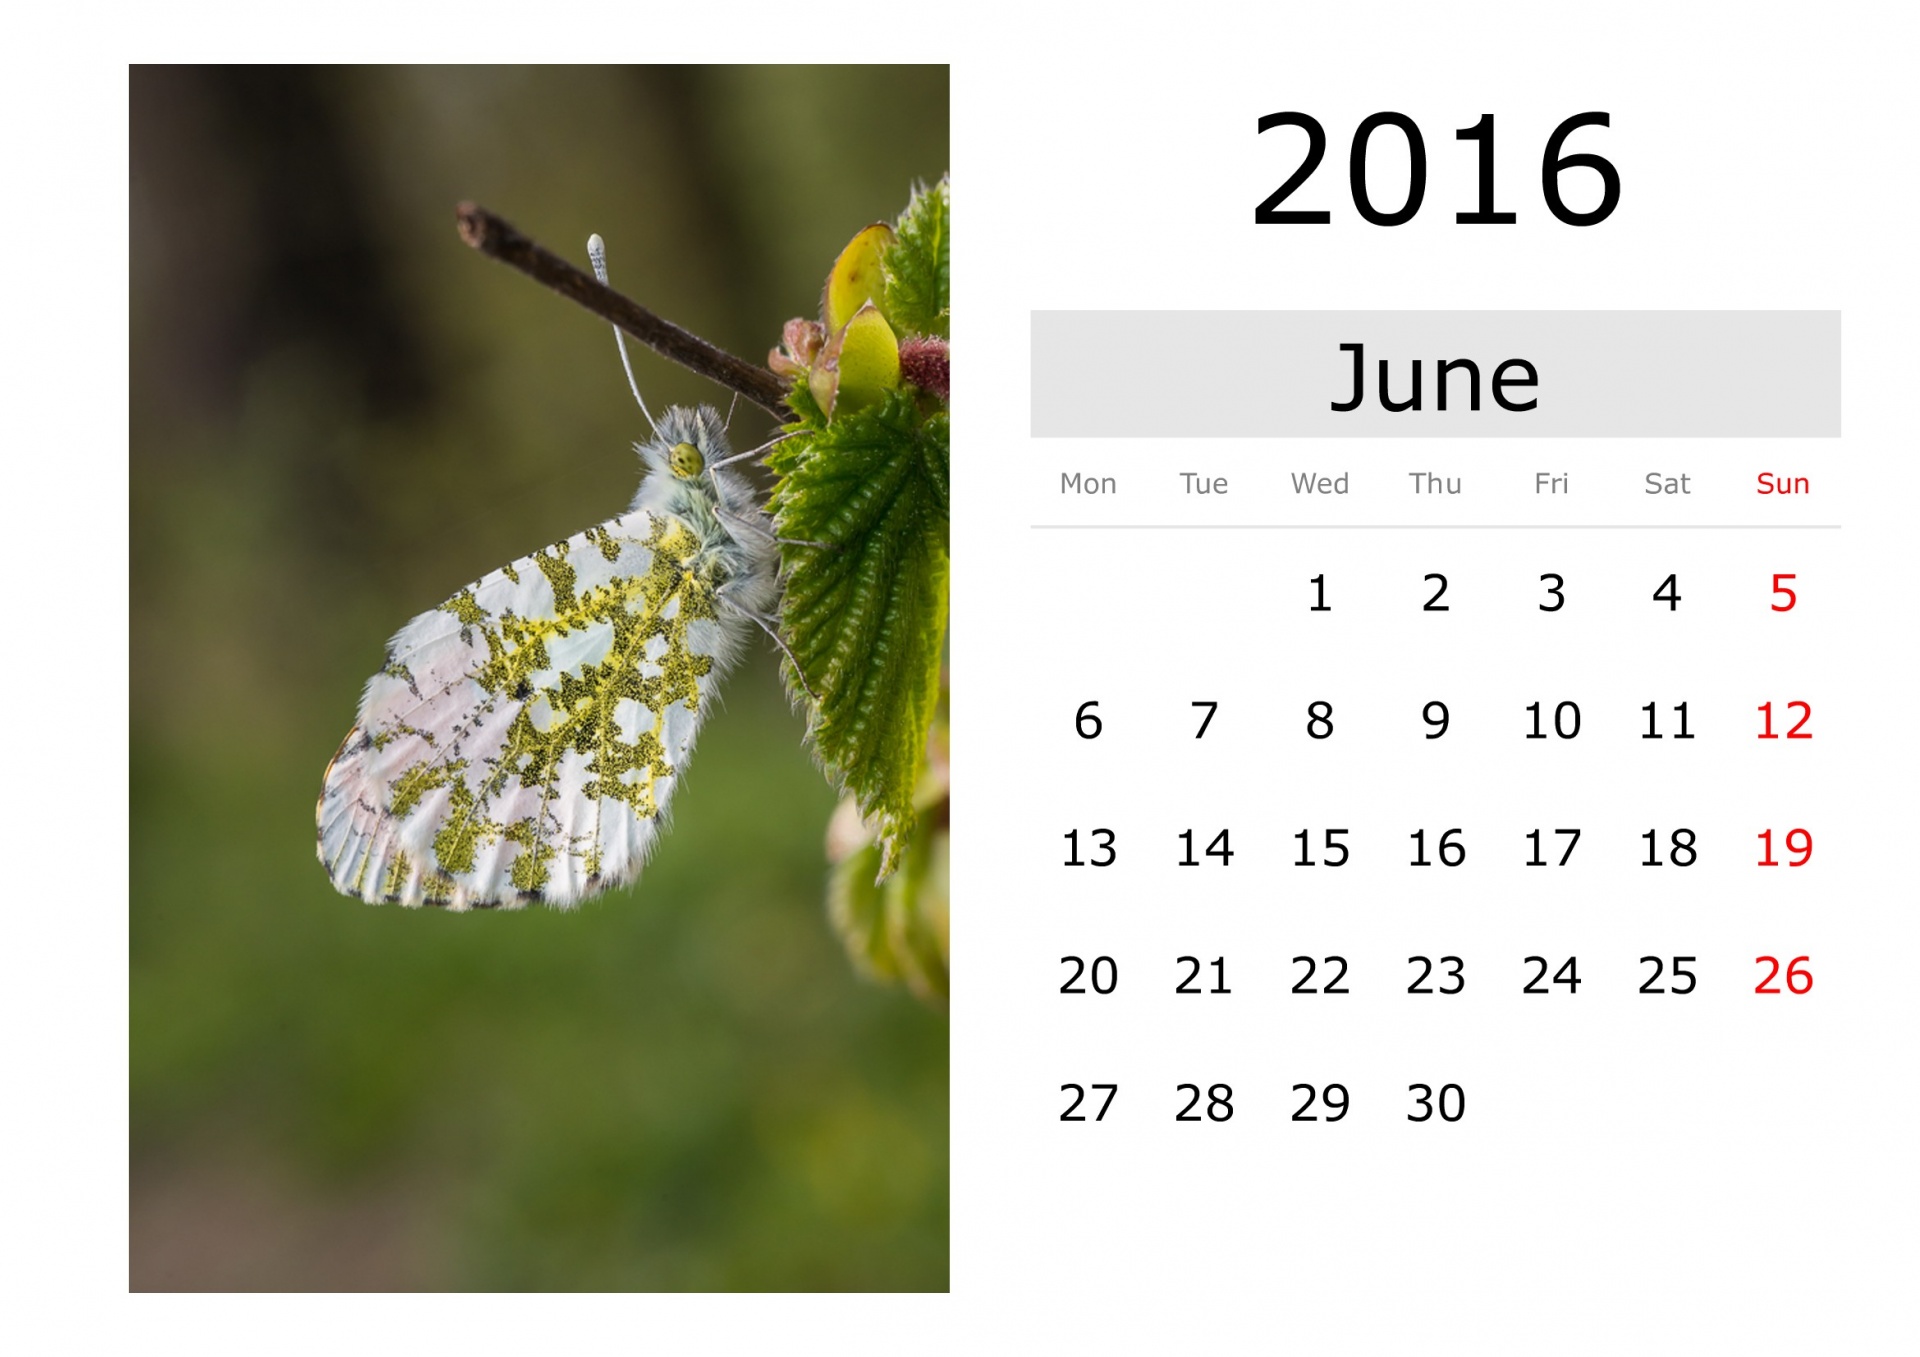 2016-2017-calendar-handbook-north-thurston-public-schools-lacey-wa